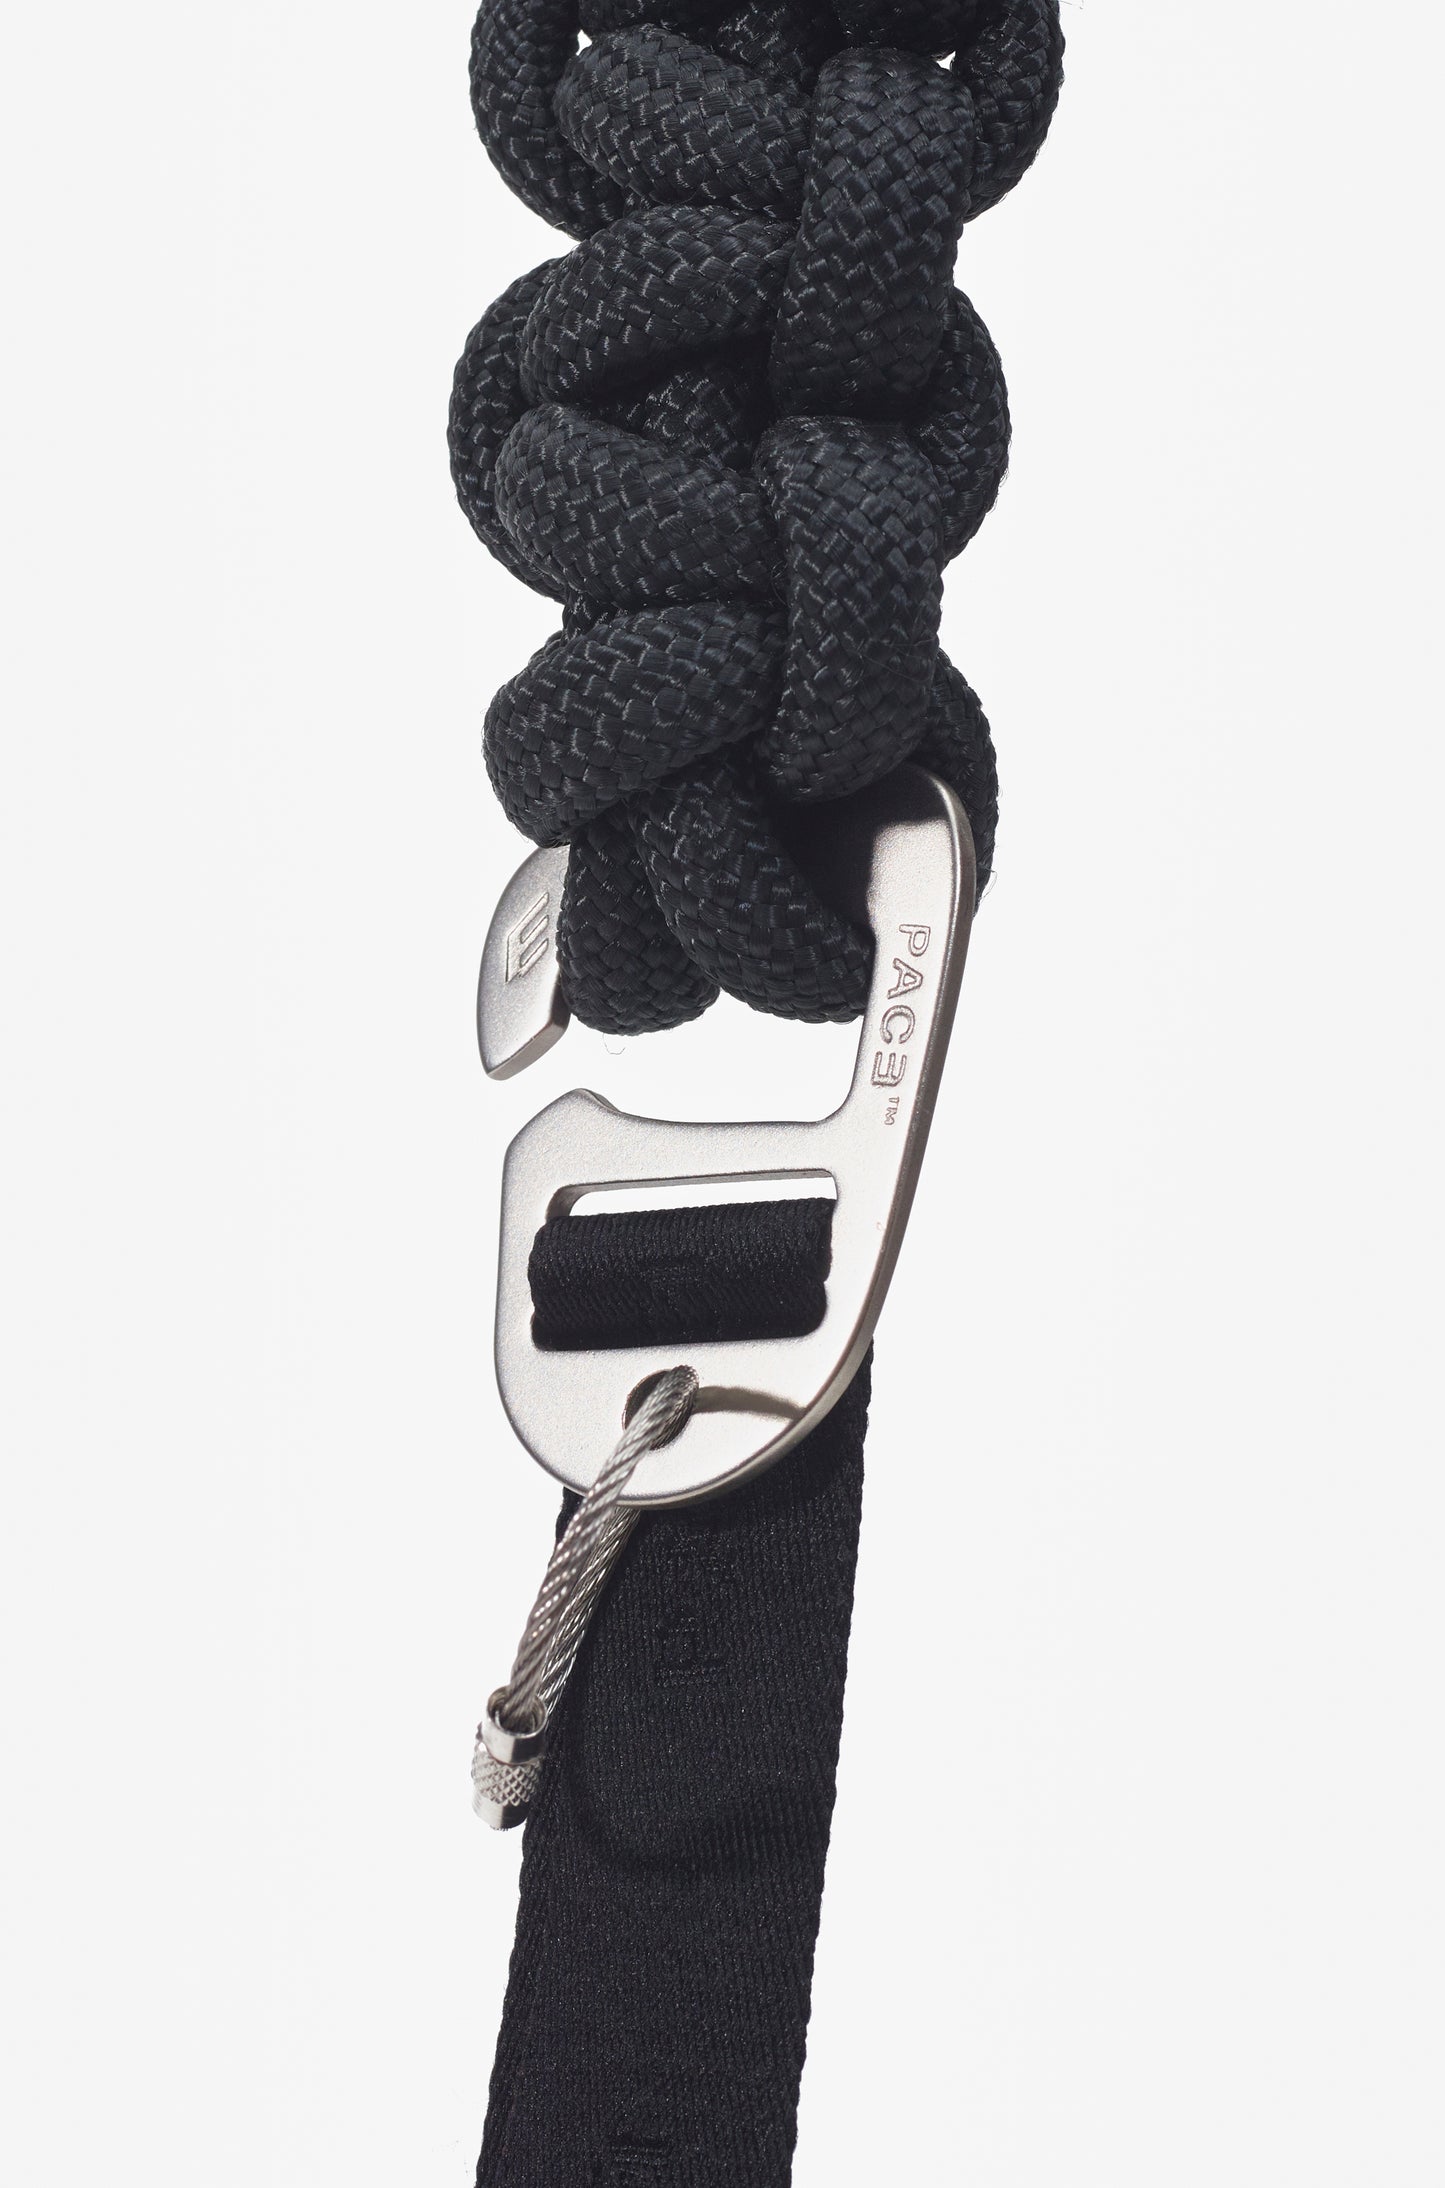 Brioz Bag 3D Knit Black and White